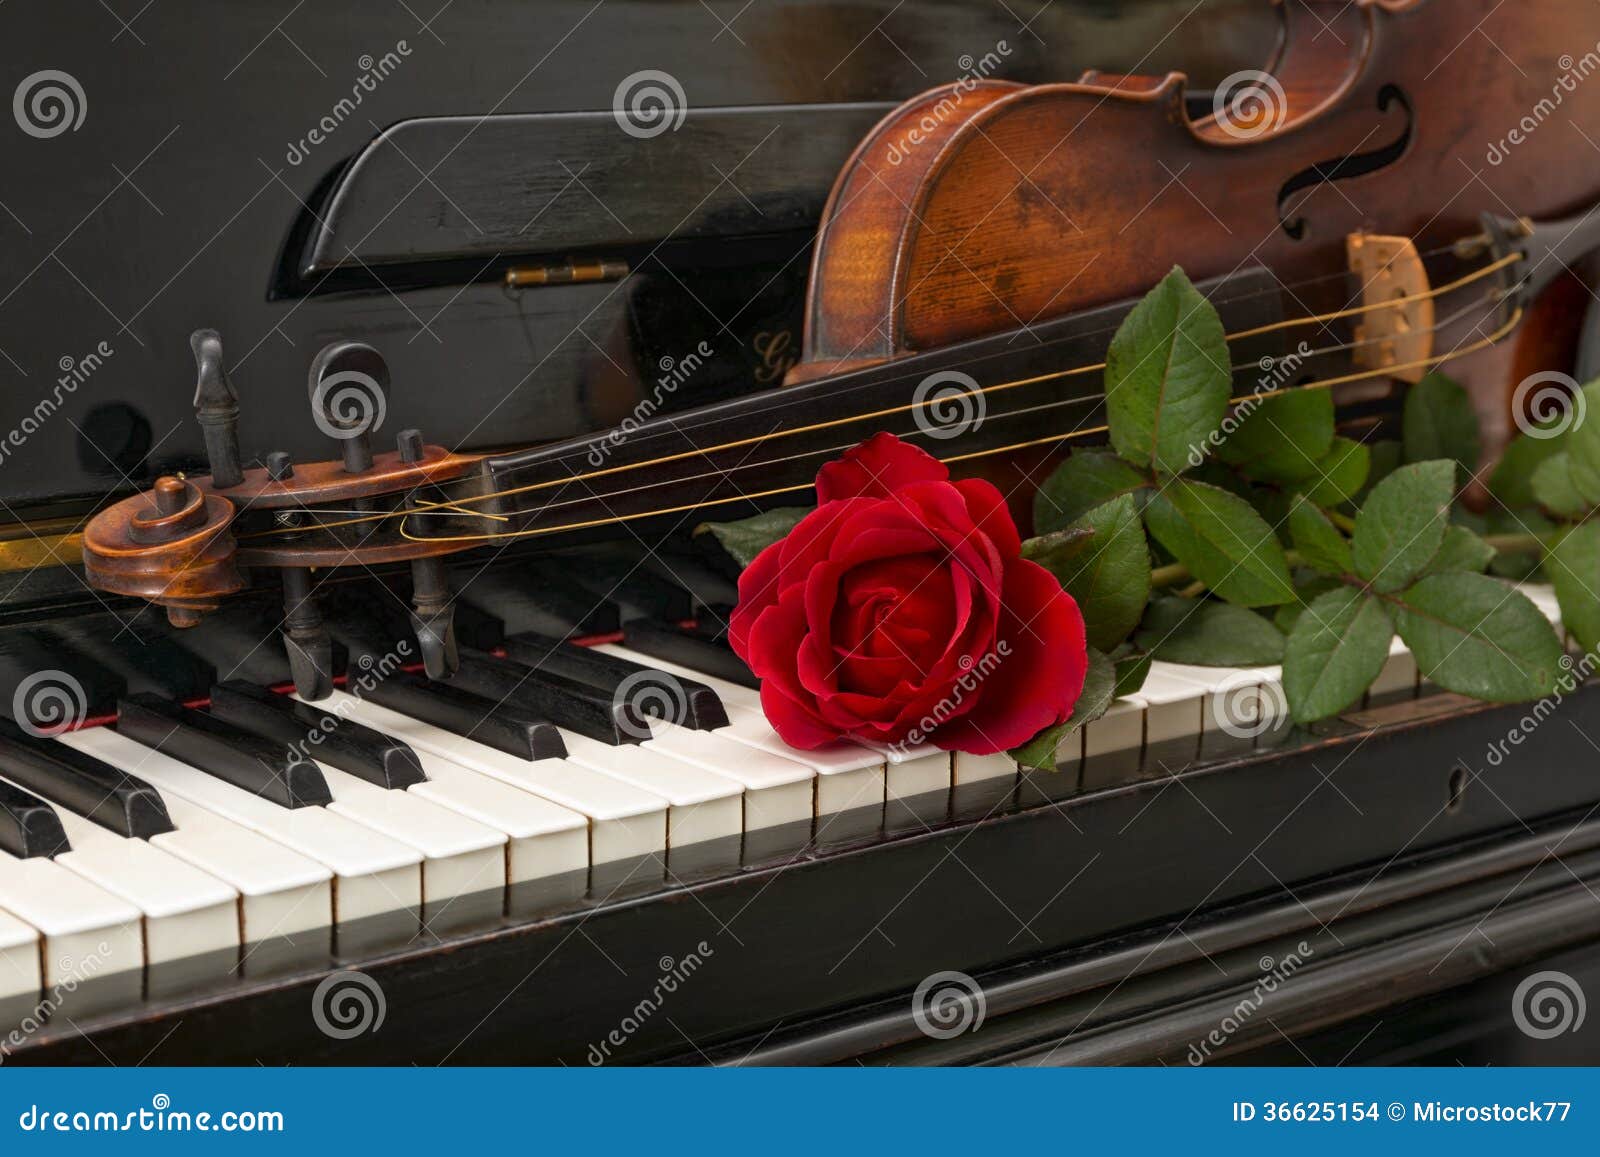 piano red rose violin